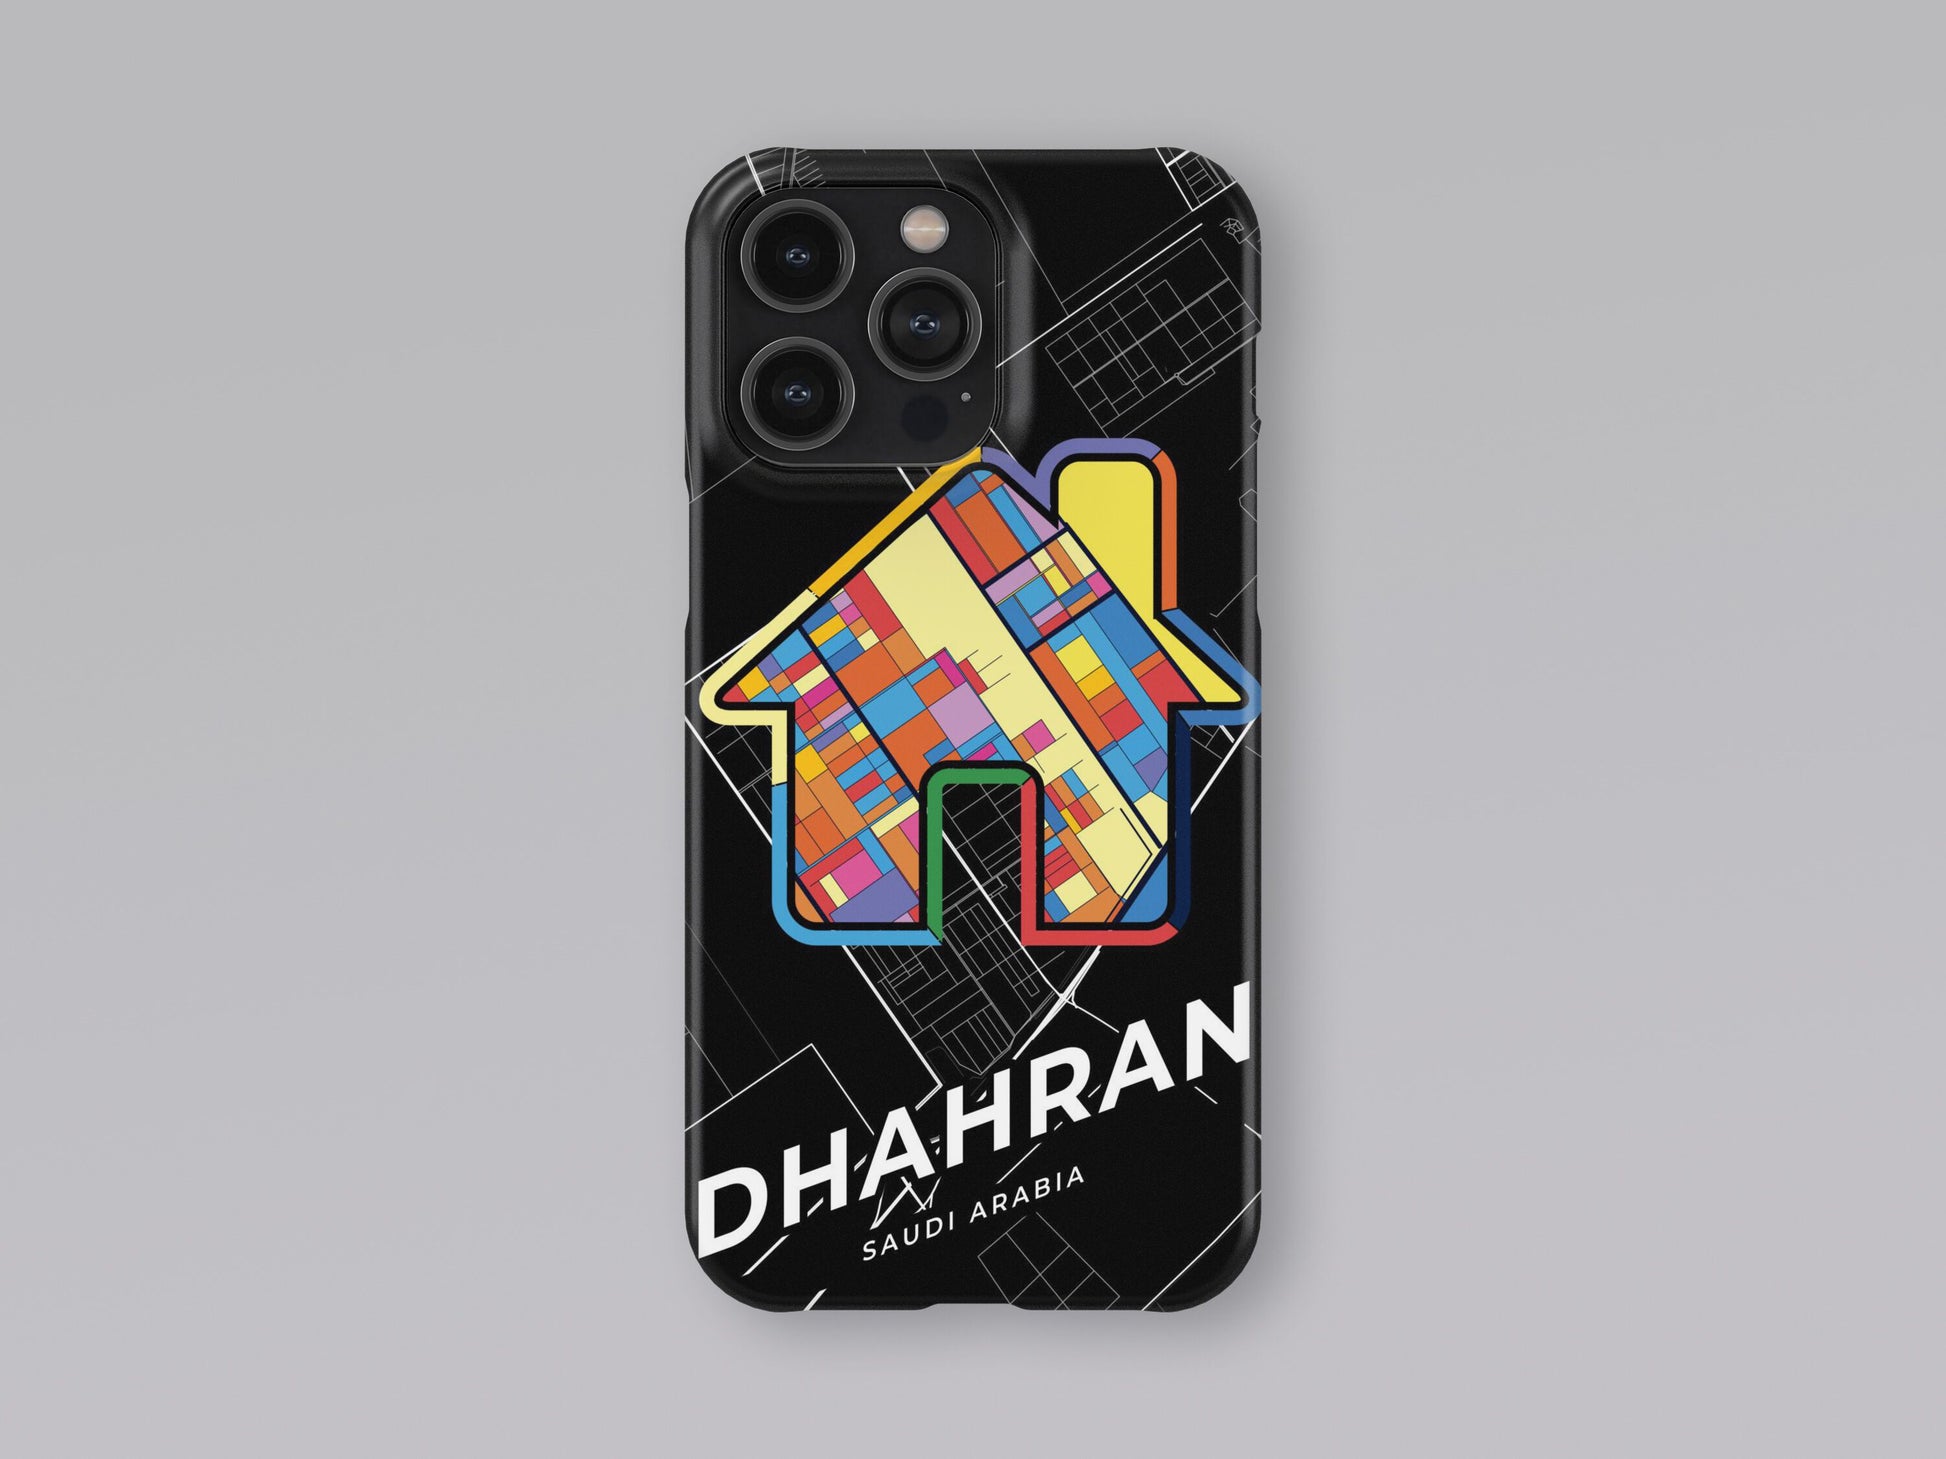 Dhahran Saudi Arabia slim phone case with colorful icon. Birthday, wedding or housewarming gift. Couple match cases. 3